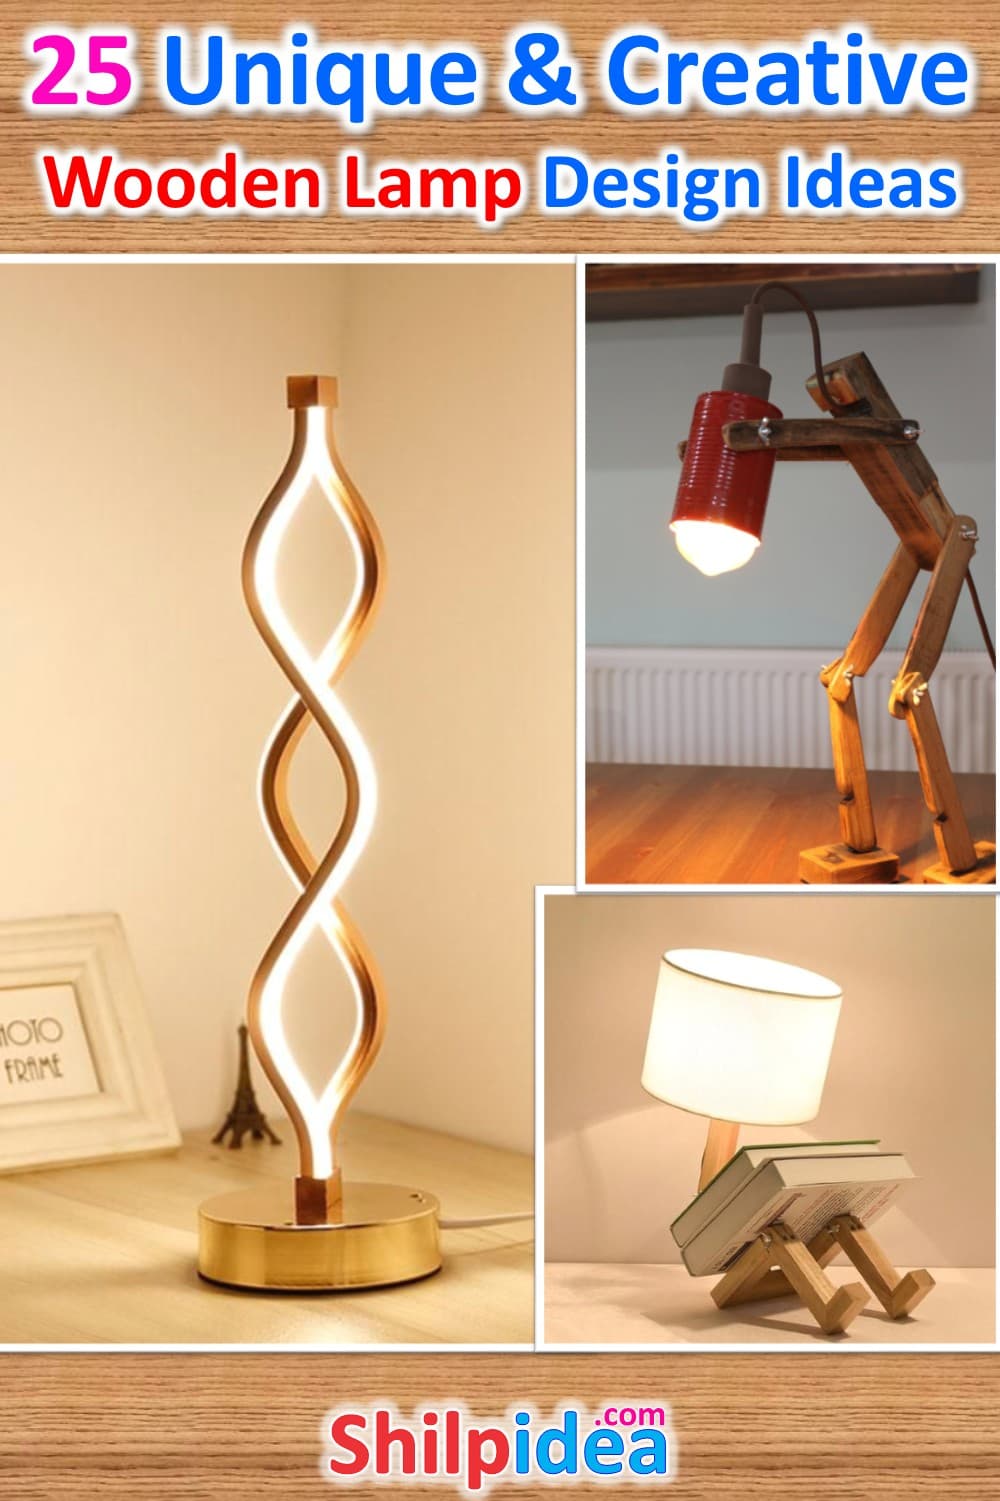 wooden-lamp-design-ideas-shilpidea-pin